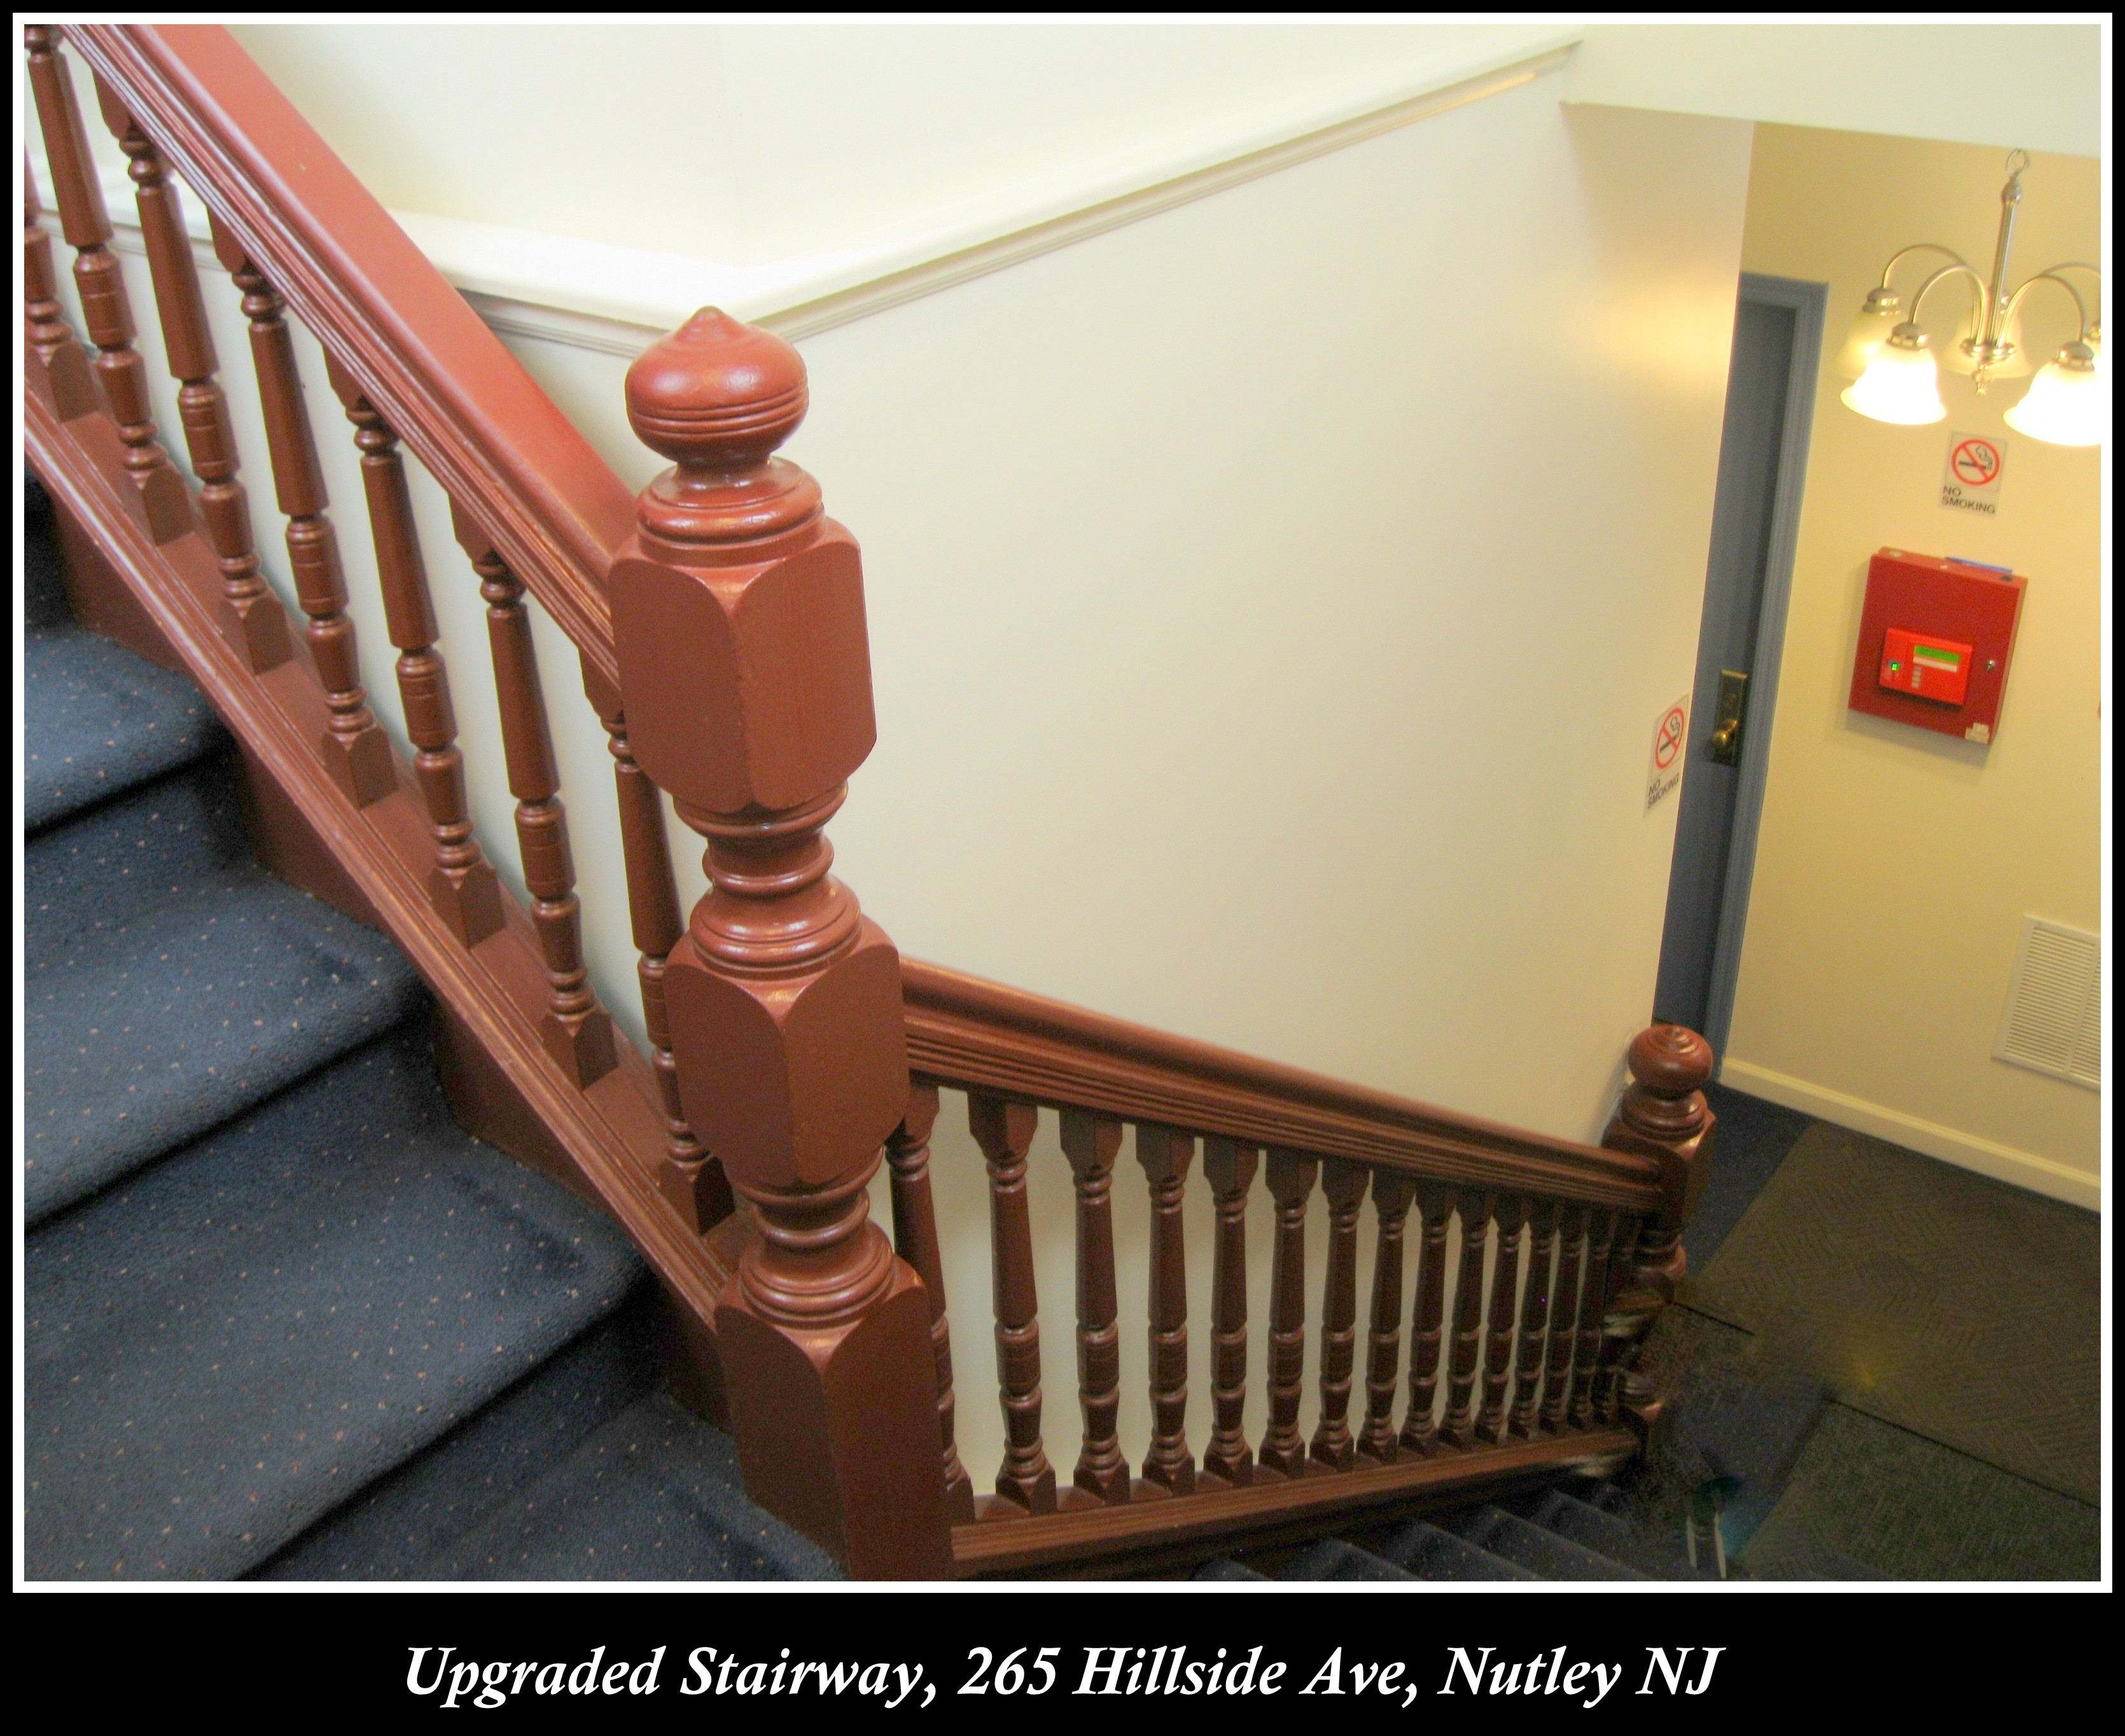 Upgraded Stairway, Rooming House, 265 Hillside Ave, Nutley NJ